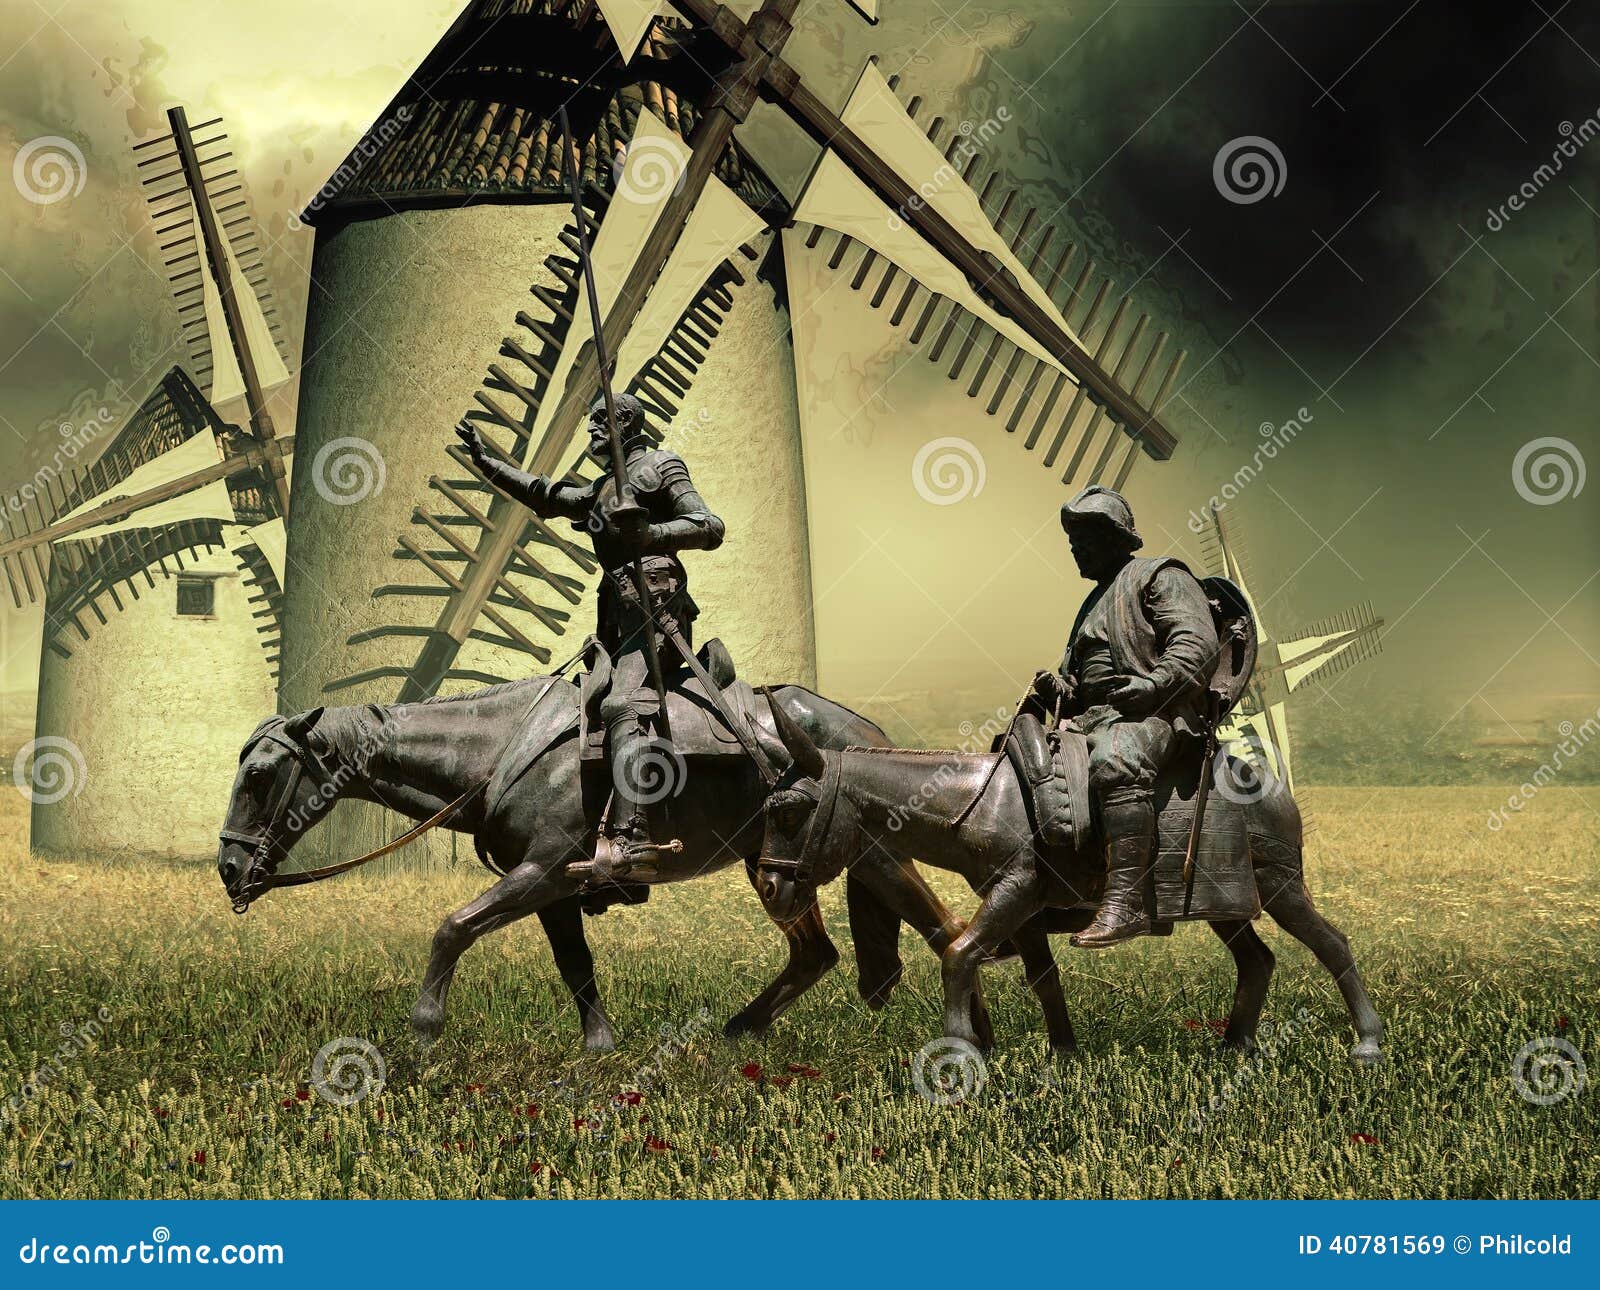 Don Quixote, Sancho Panza And The Windmills Stock Photo | CartoonDealer ...